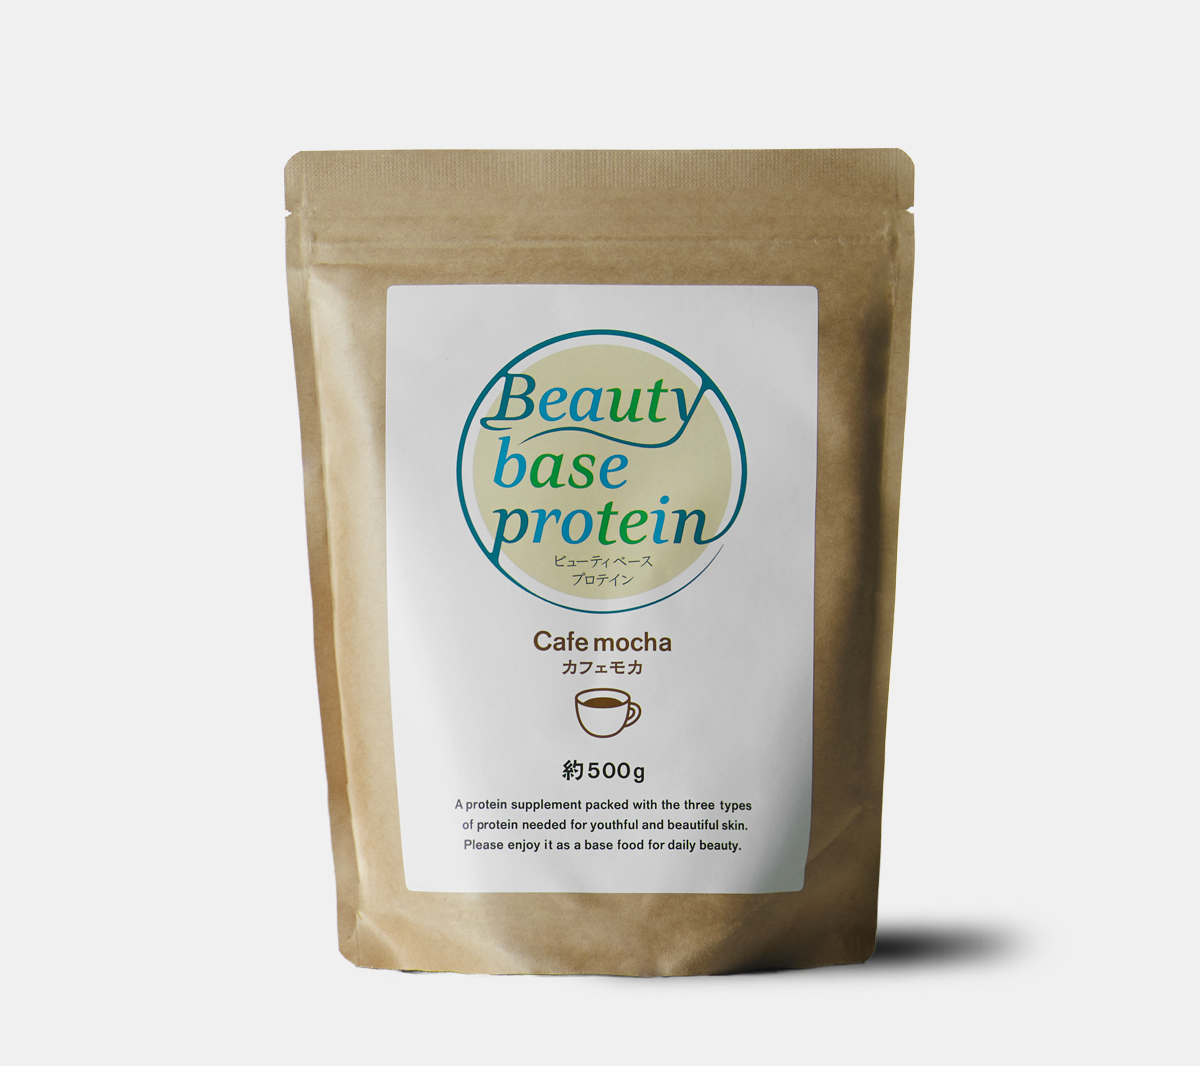 Beauty Base Protein Cafe mocha